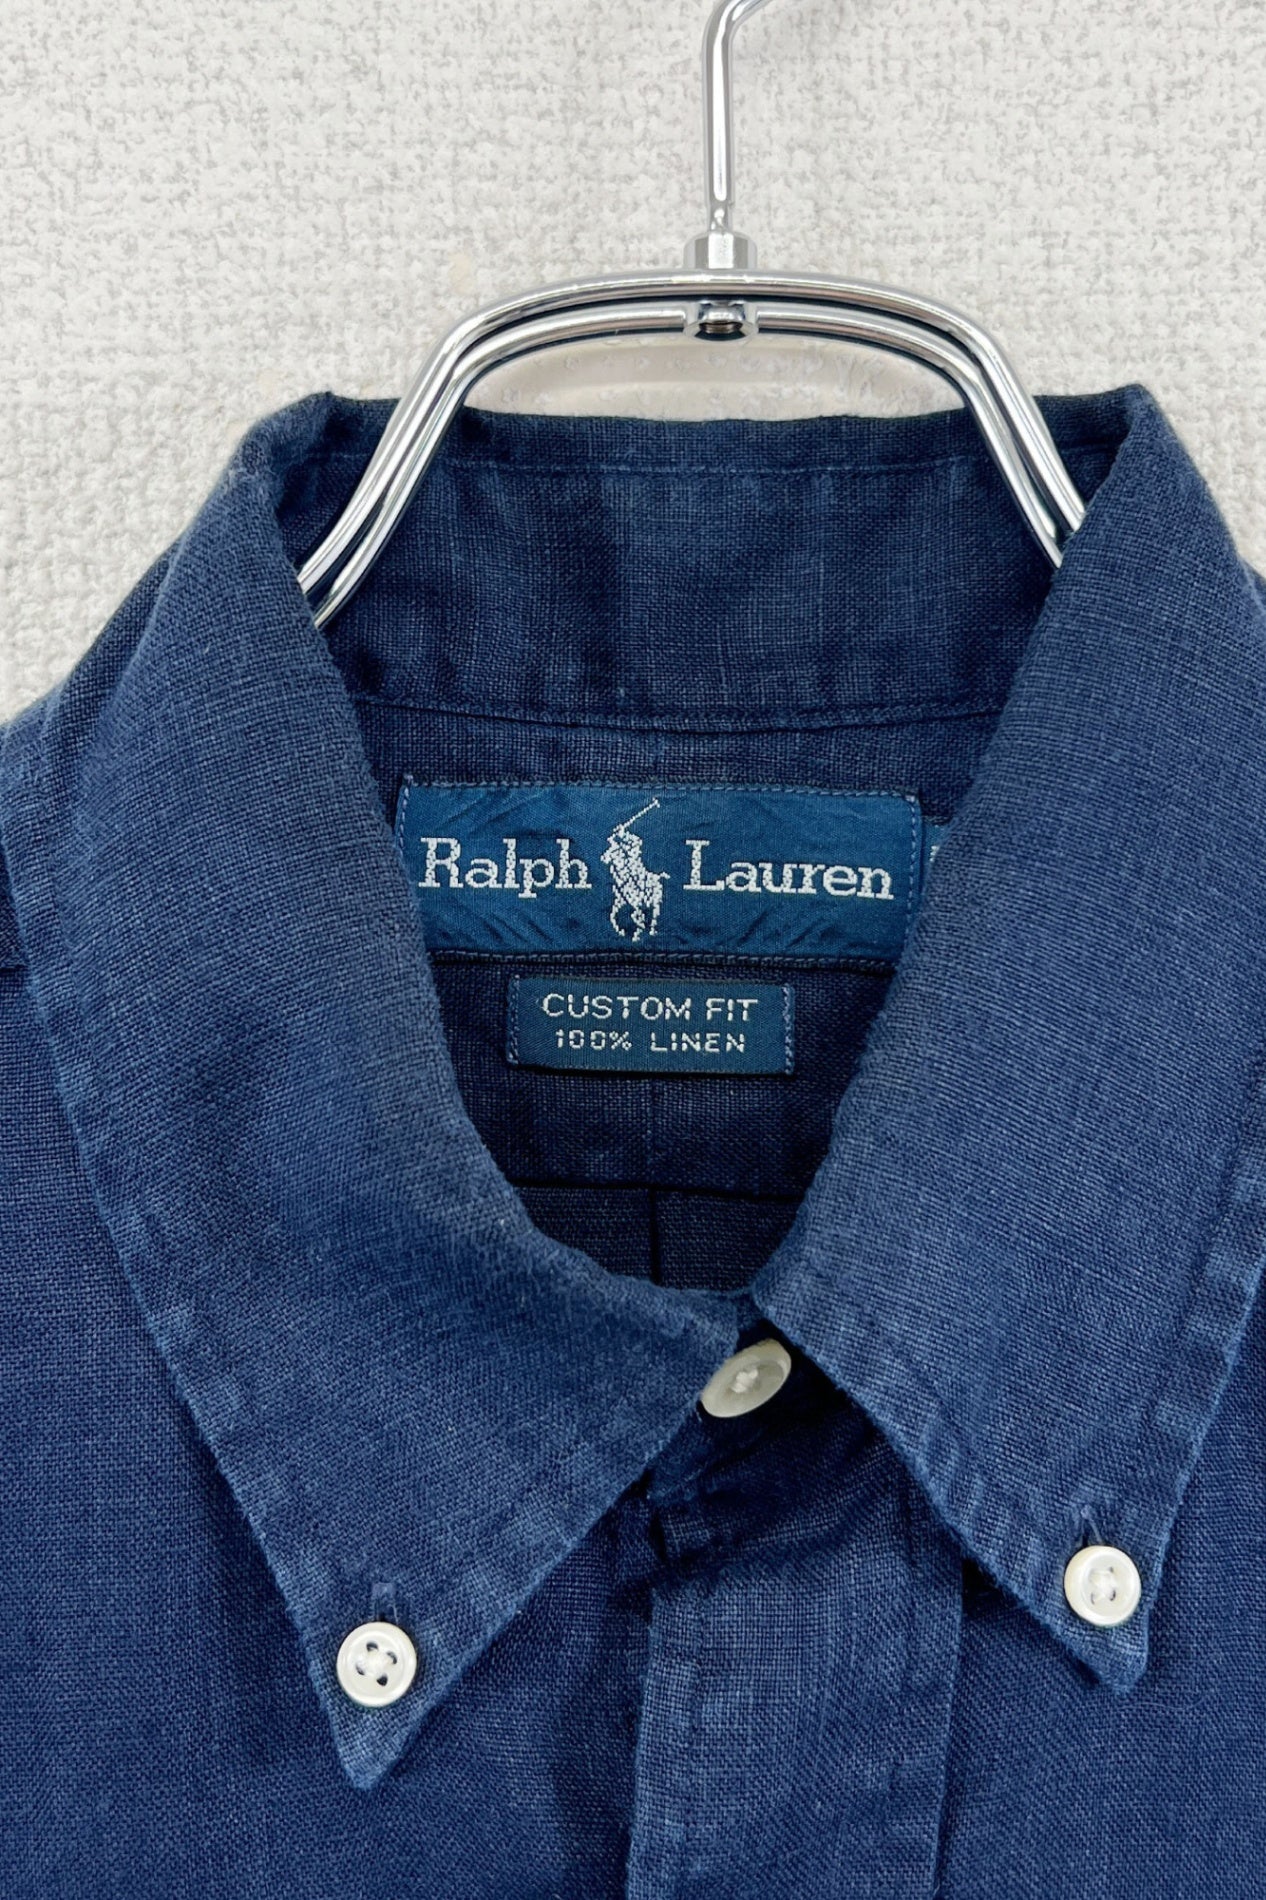 90 年代 Ralph Lauren 亚麻衬衫